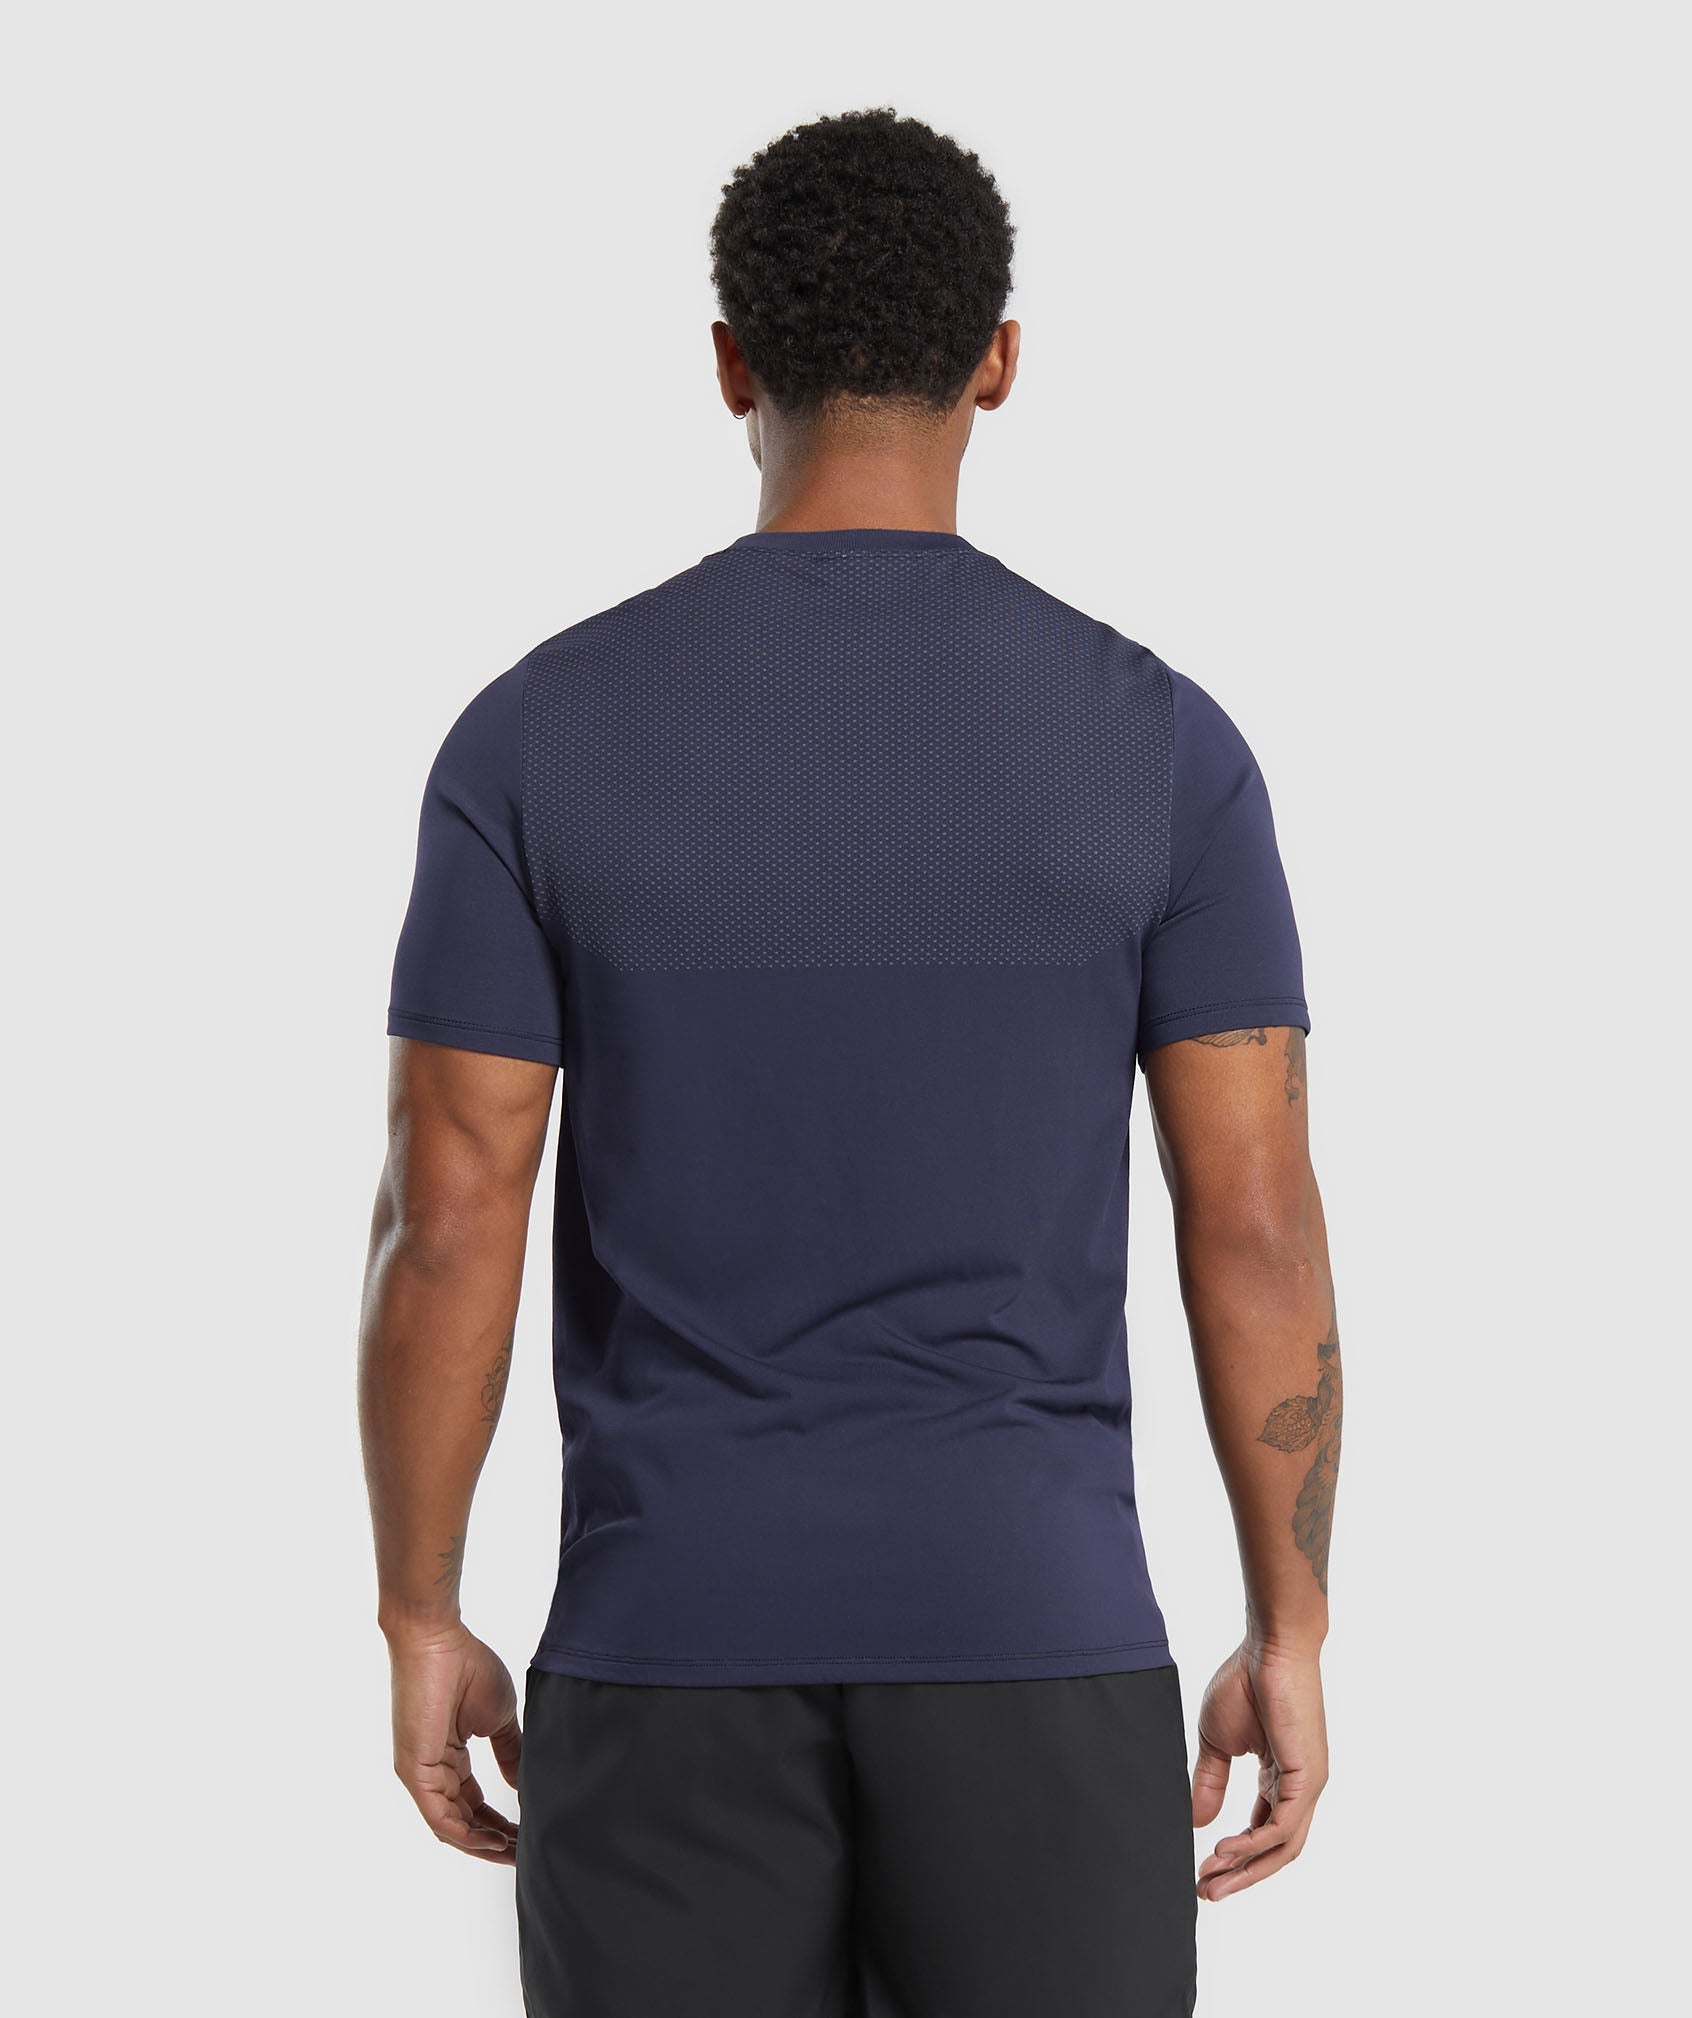 Vital Seamless T-Shirt in Navy/Light Grey - view 2